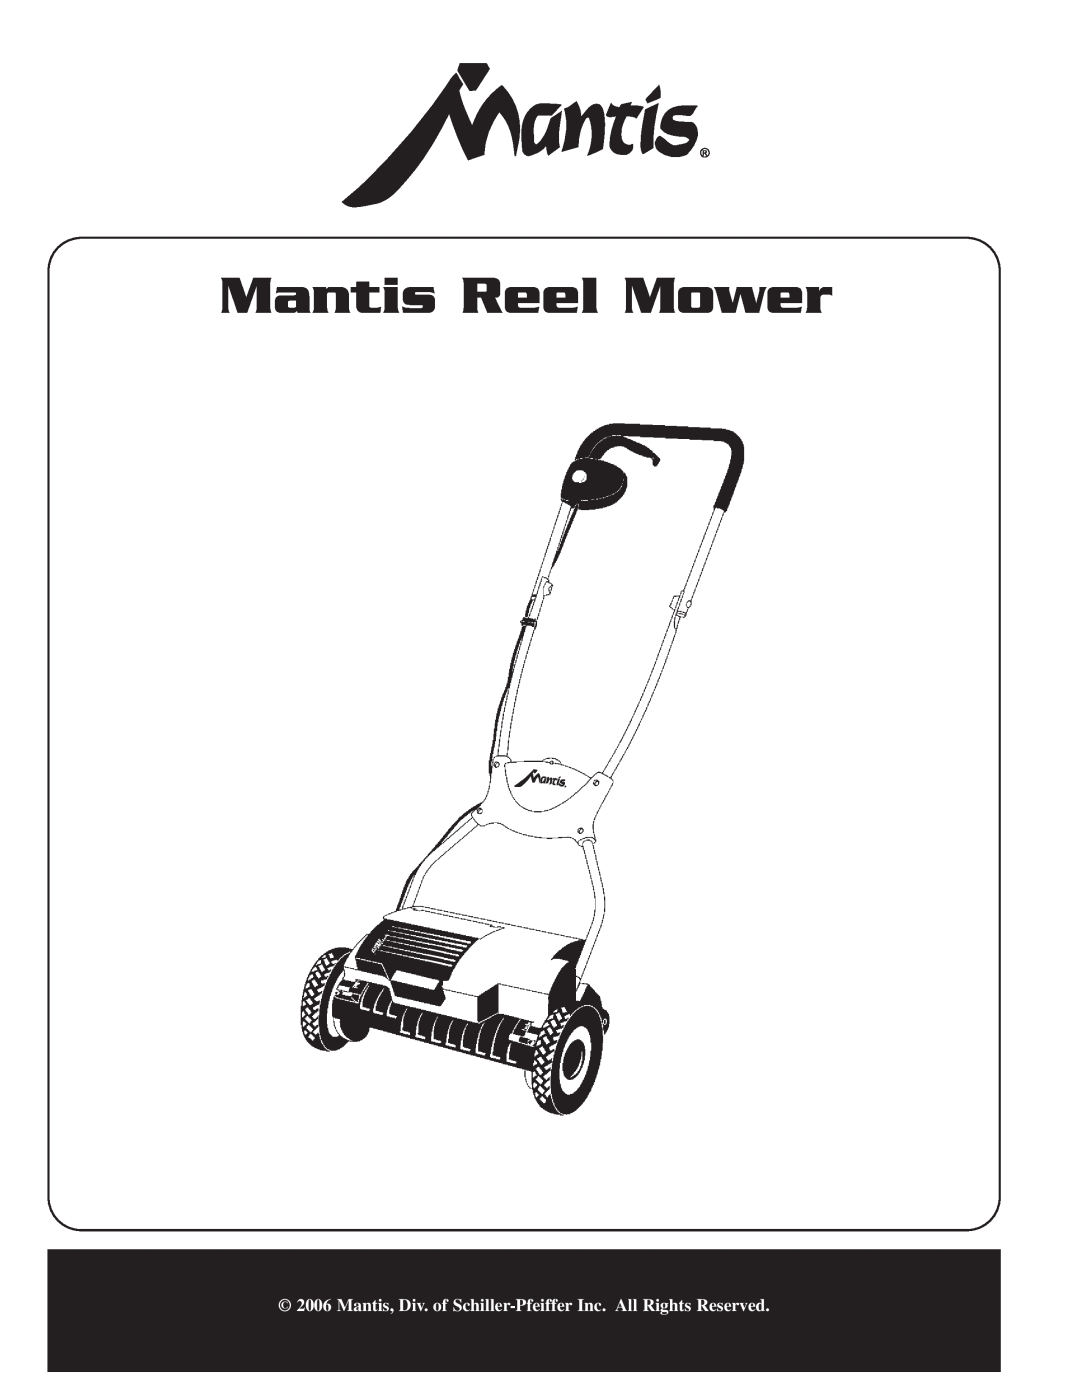 Mantis manual Mantis Reel Mower 